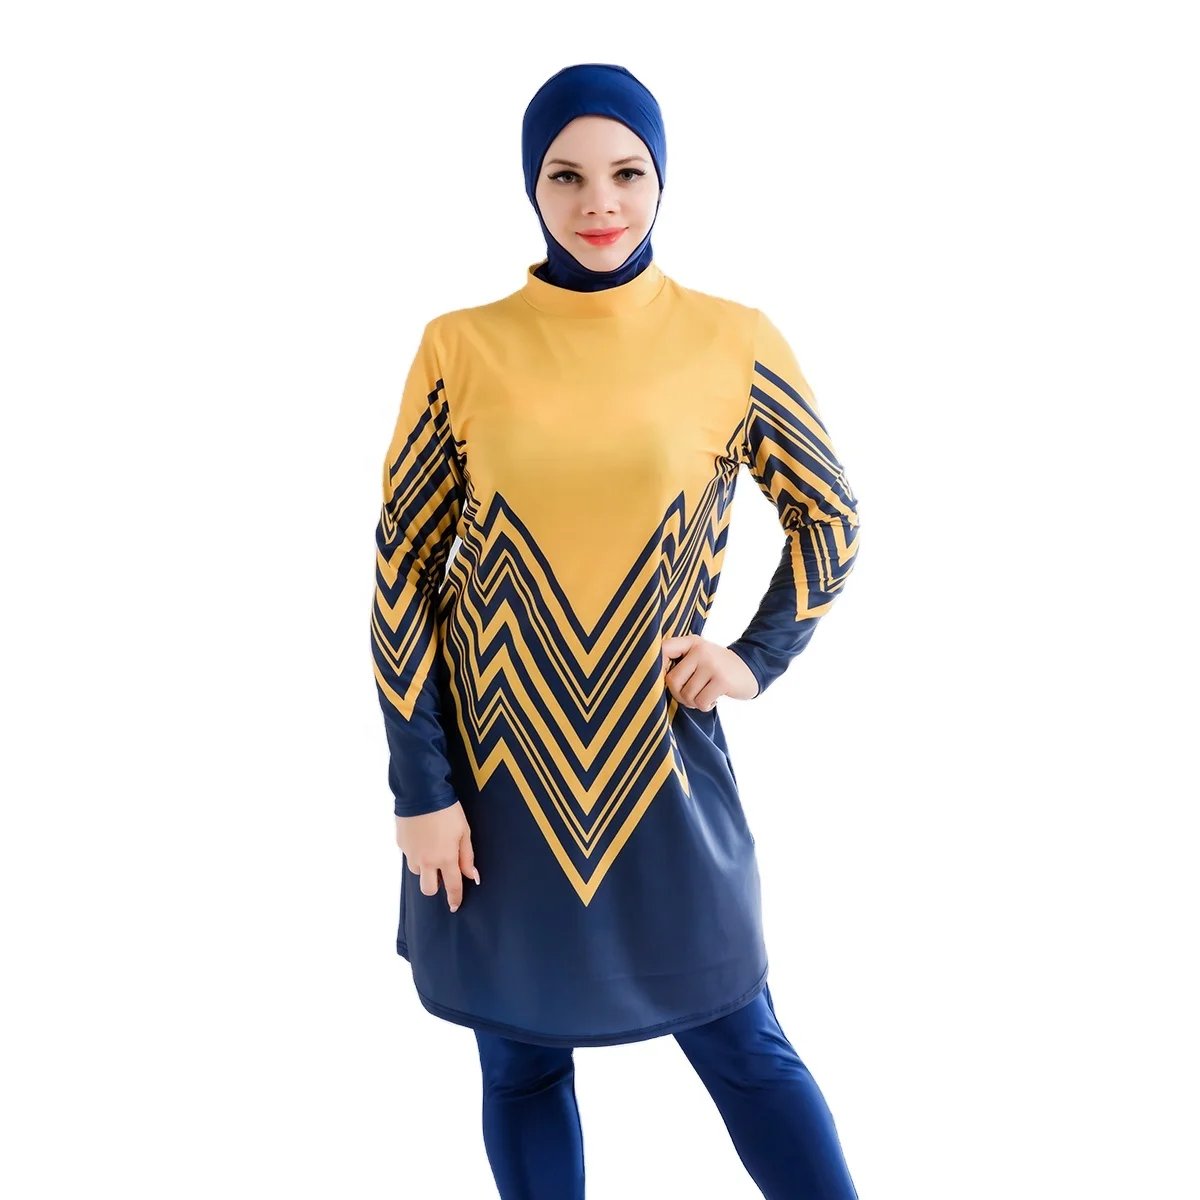 

MOTIVE FORCE 3pcs Digital Printing Islamic Swimsuit Swimwear Set For Muslim Woman Dark Blue And Yellow Burkini